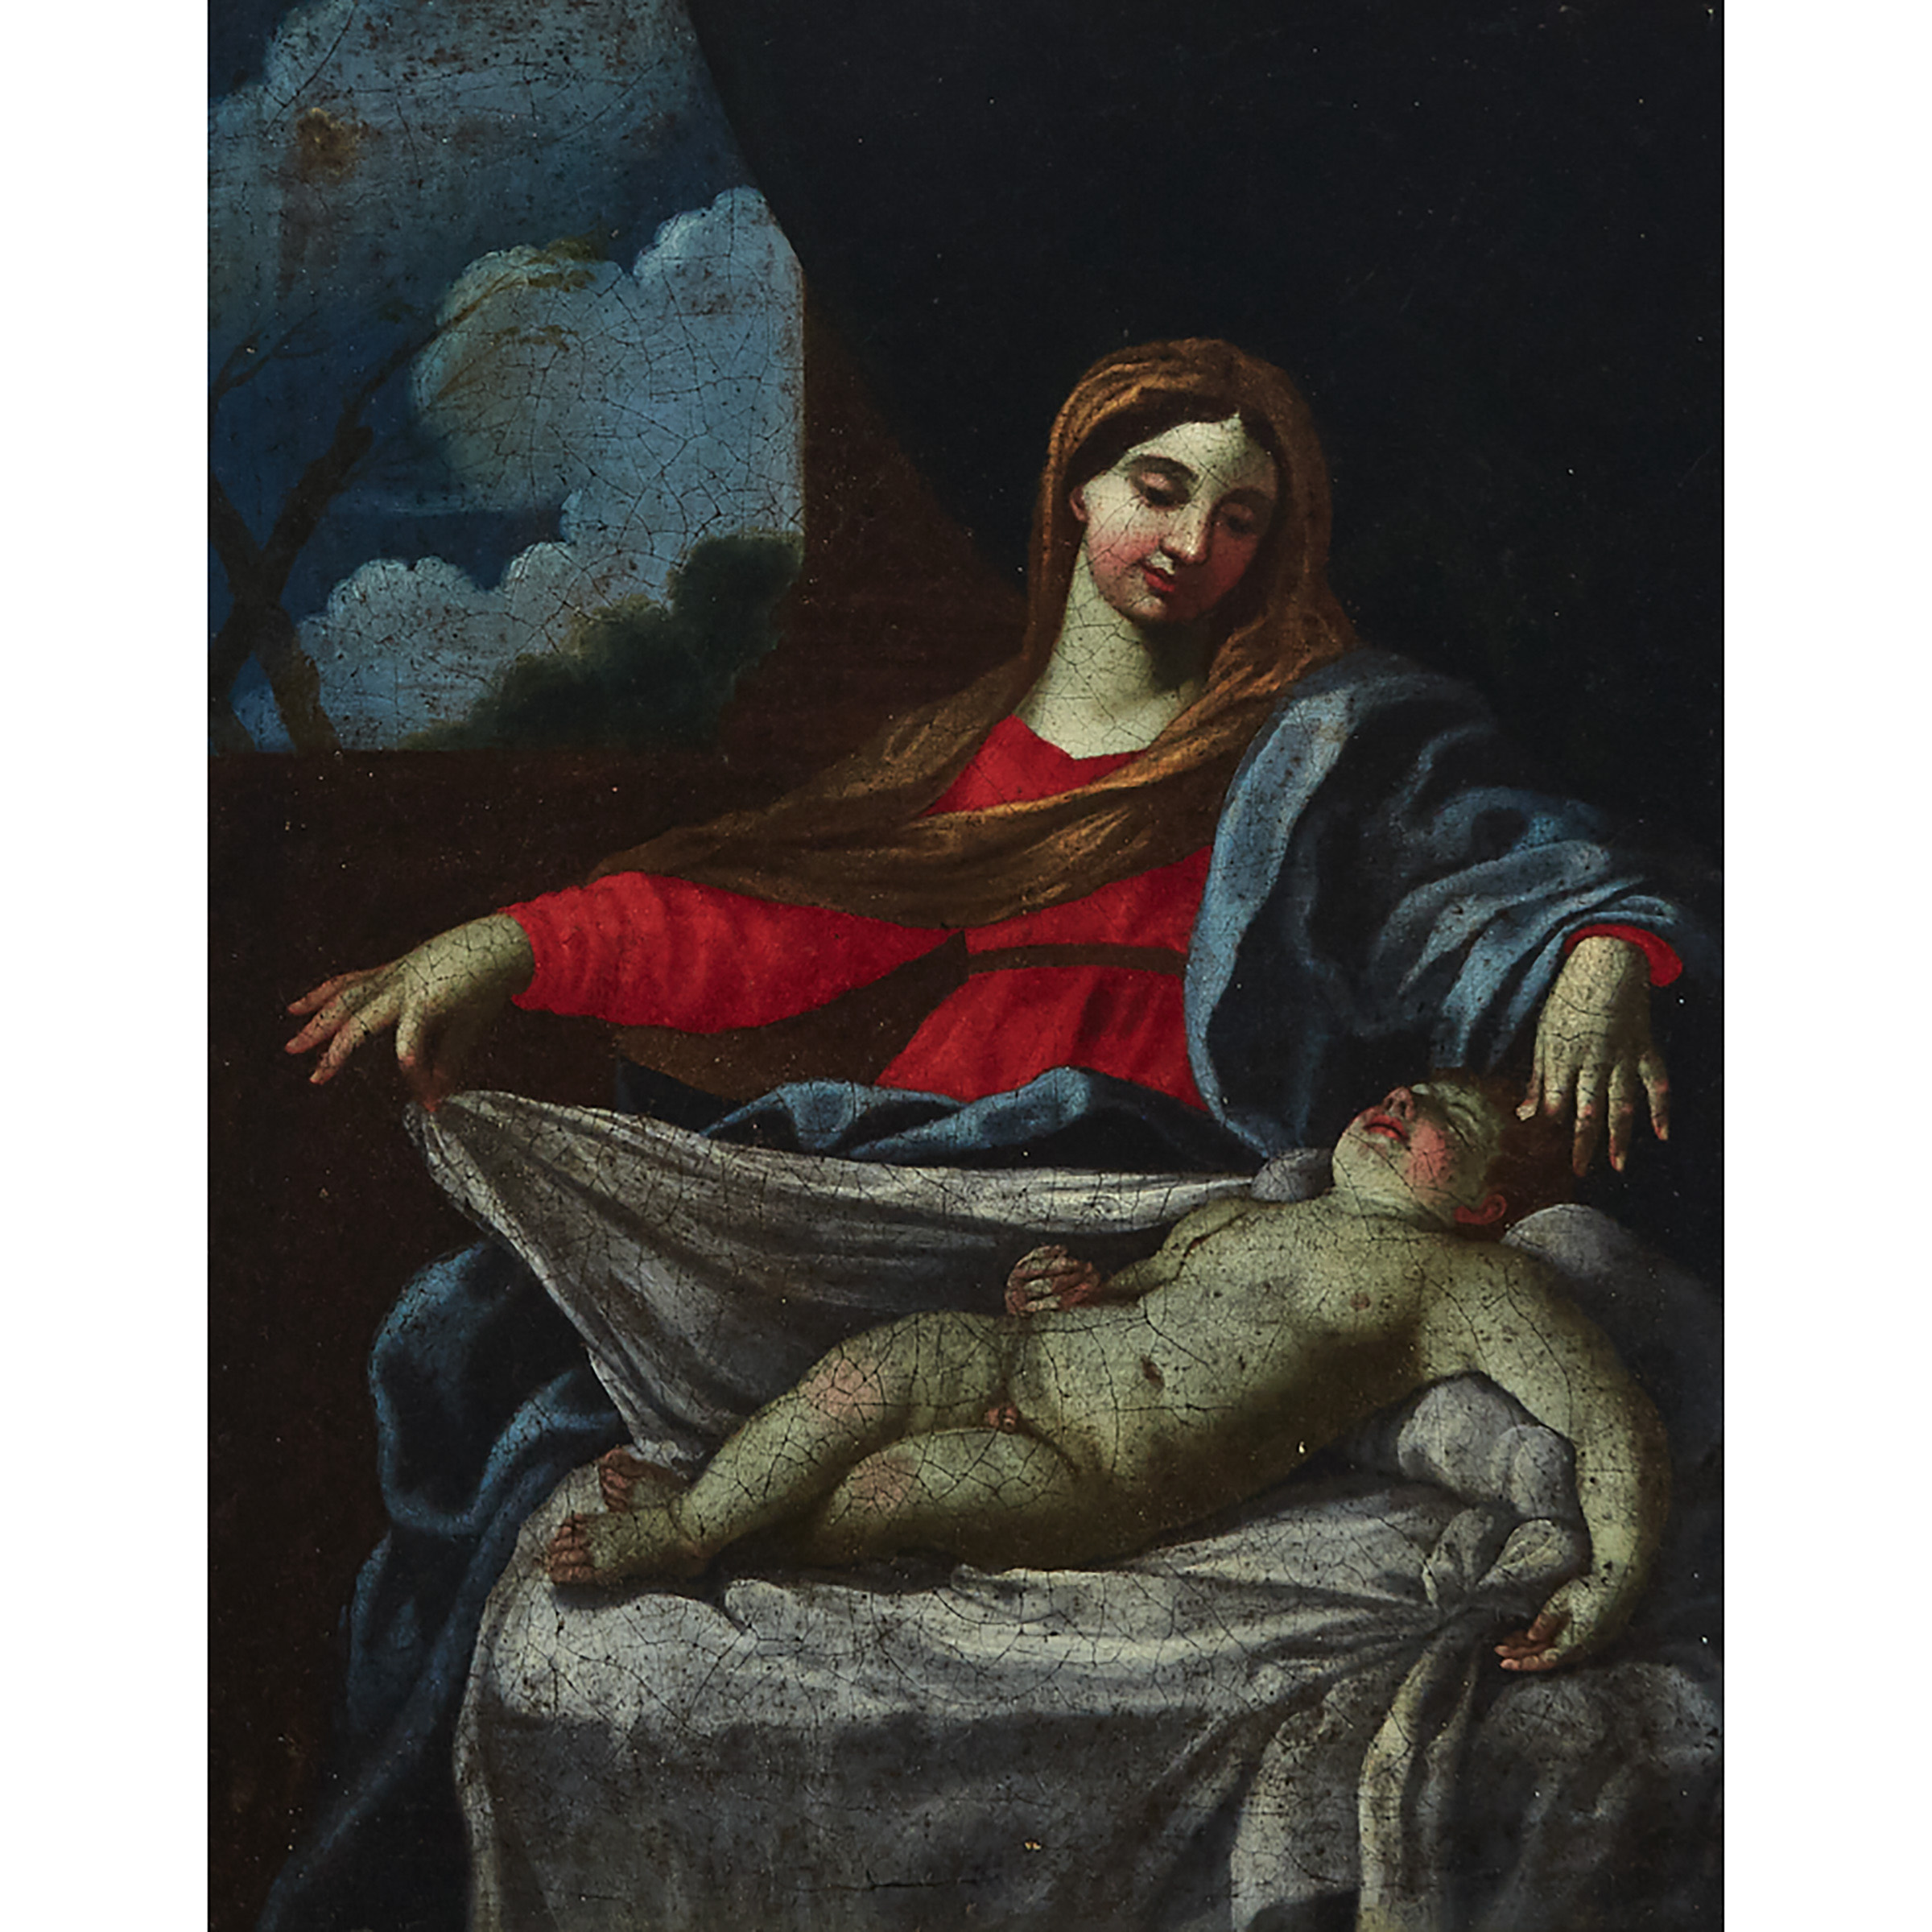 After Guido Reni (1575-1642)